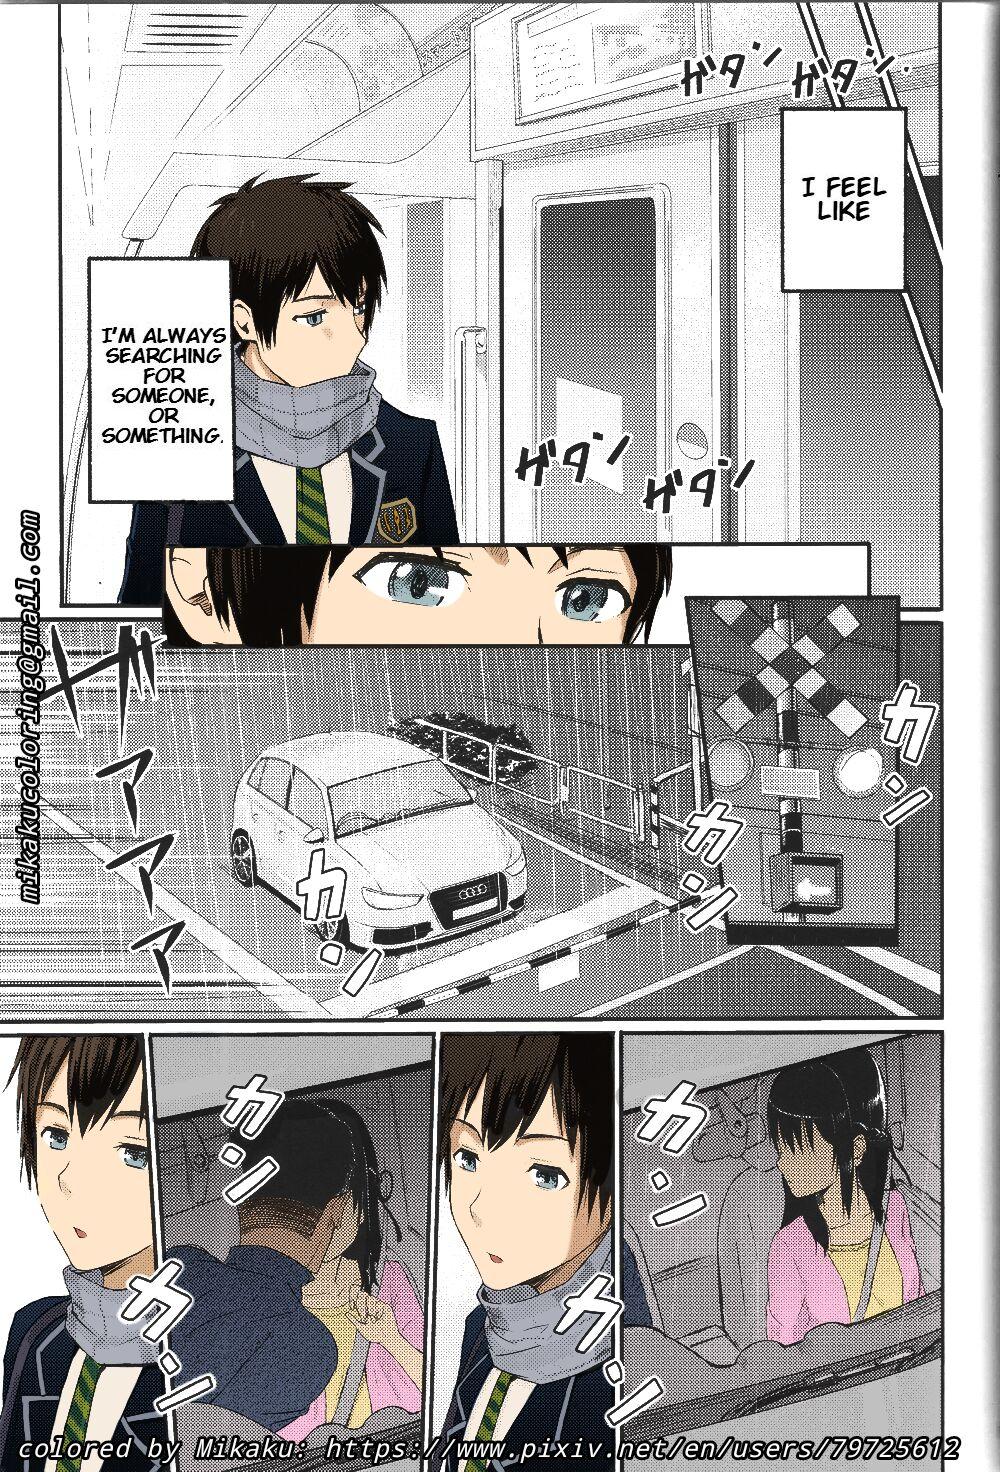 Misunderstanding Love Hotel Netorare [Arakure] & Kimi no na wa: After Story - Mitsuha ~Netorare~ [Syukurin] (colored by Mikaku) 41